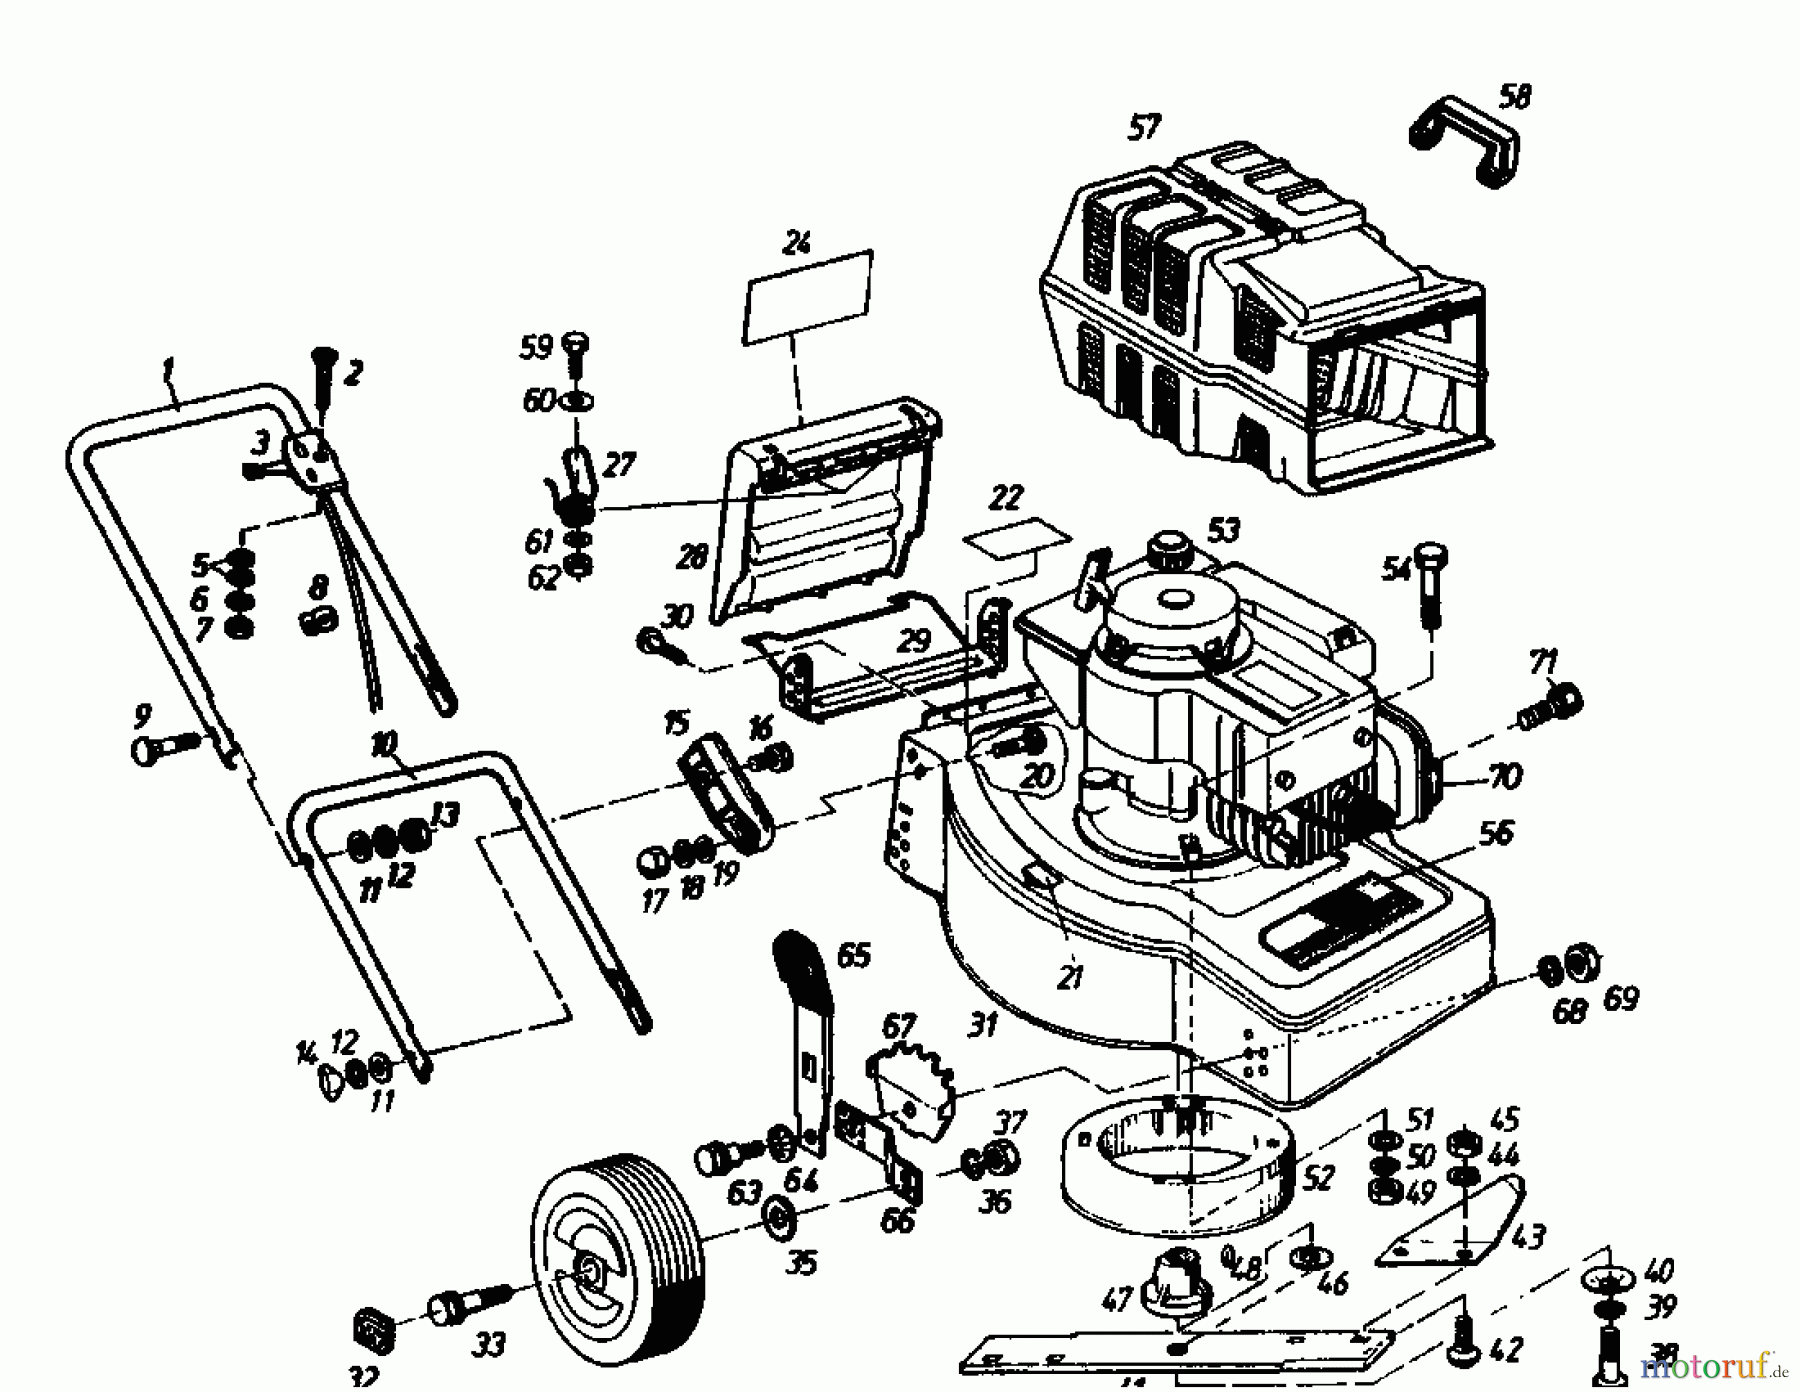  Golf Petrol mower Golf 4 T 02891.02  (1986) Basic machine